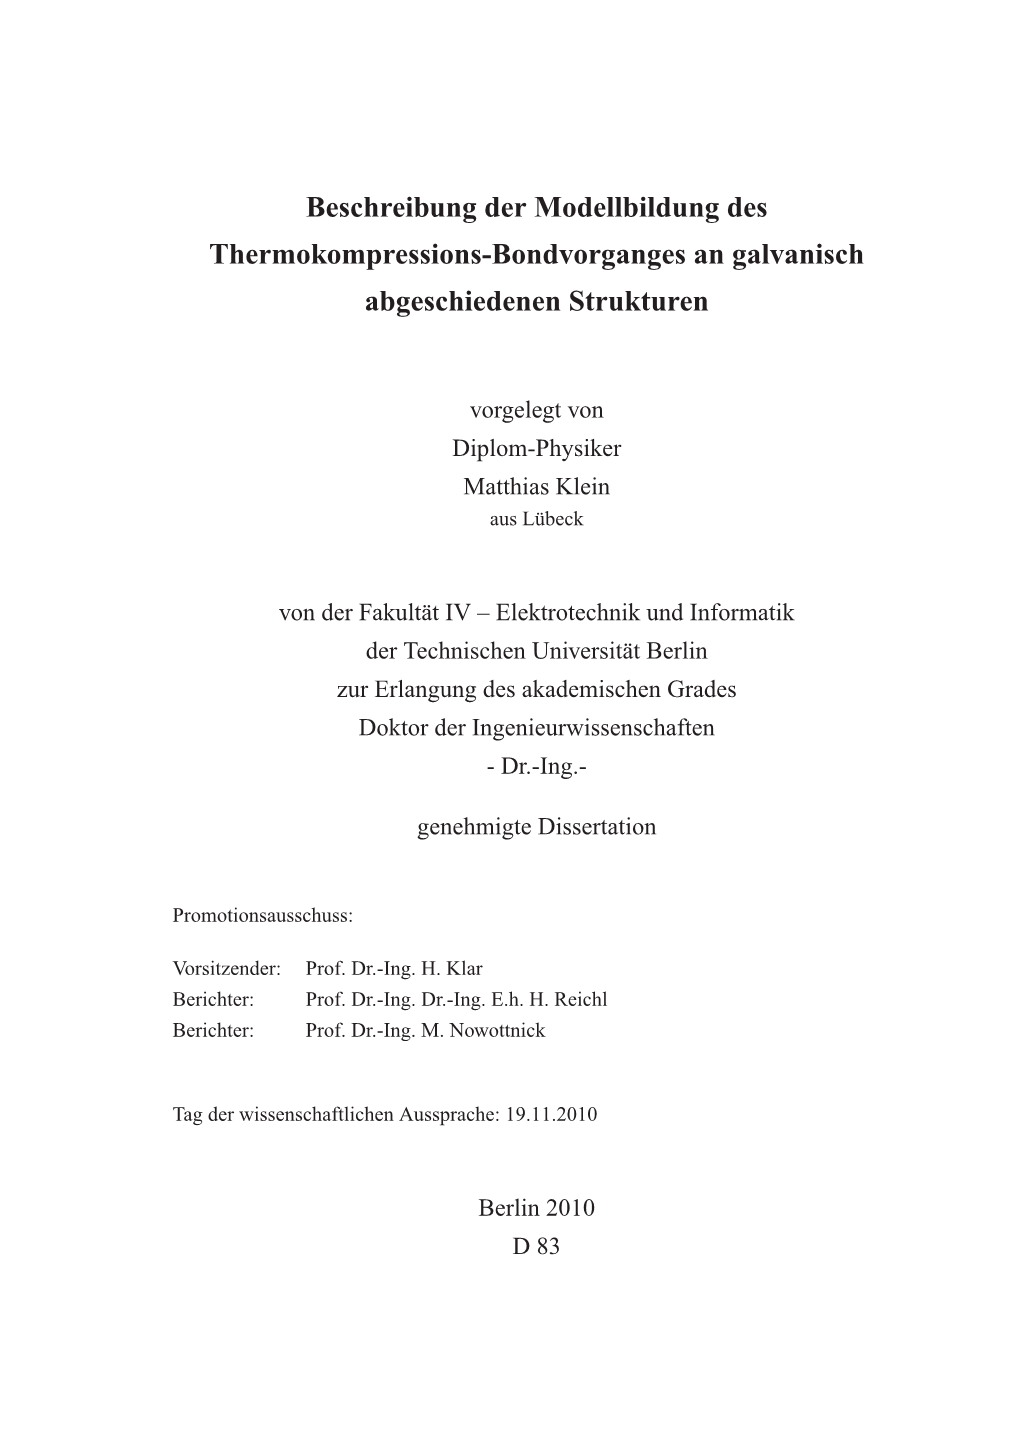 Dissertation Matthias Klein